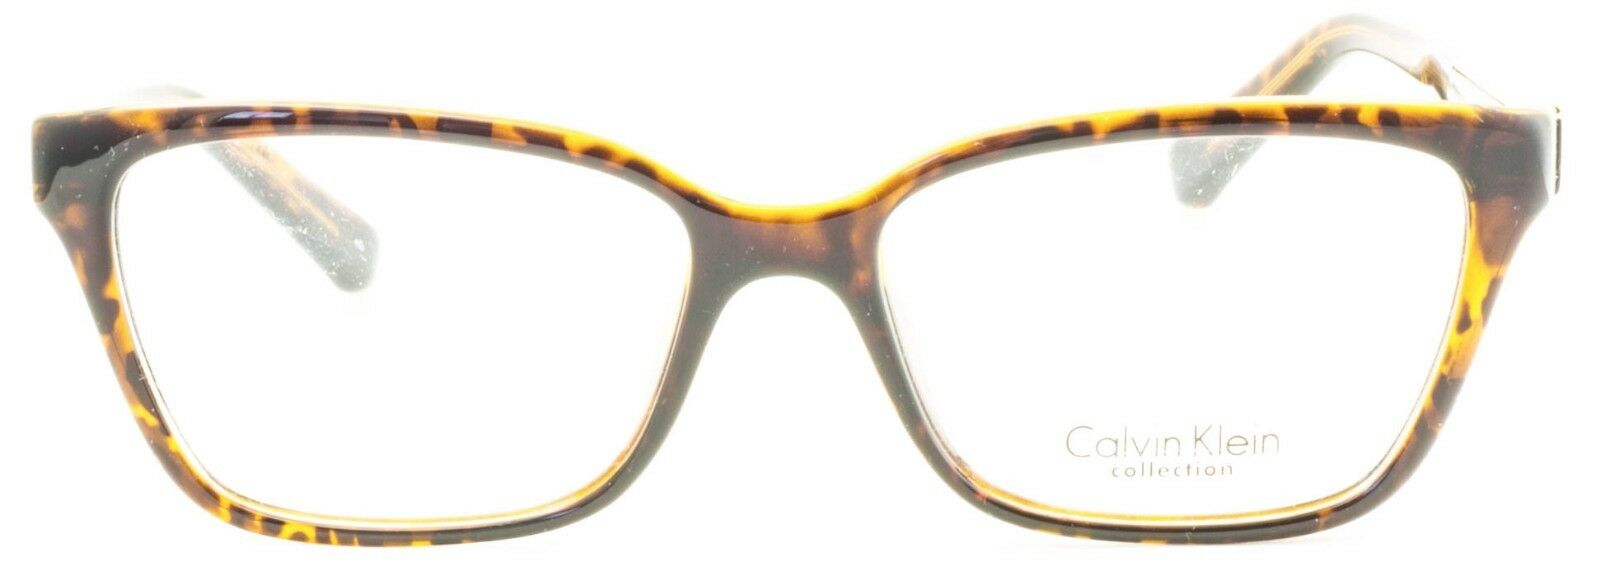 CALVIN KLEIN CK7935 214 Eyewear RX Optical FRAMES NEW Eyeglasses Glasses - BNIB